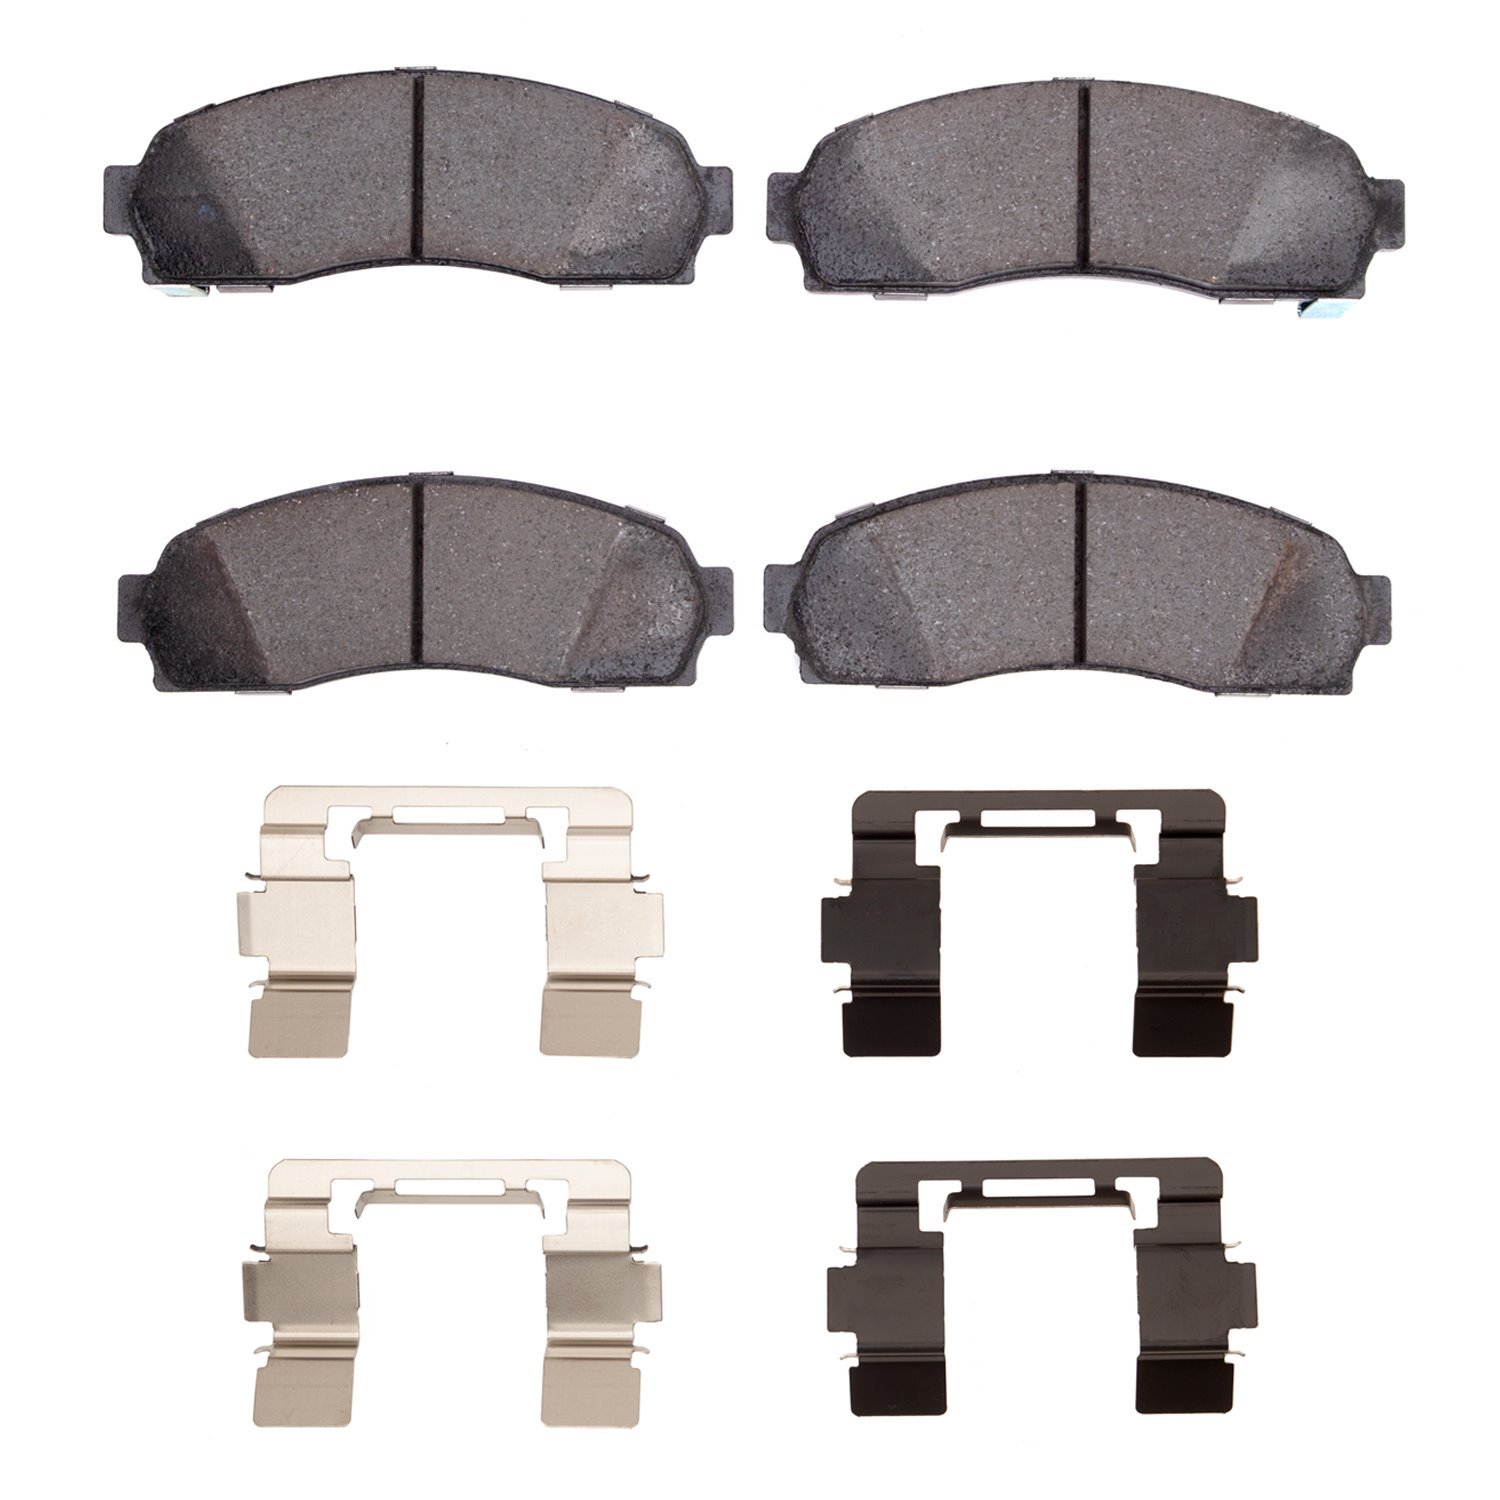 1214-0833-01 Heavy-Duty Brake Pads & Hardware Kit, 2002-2012 Multiple Makes/Models, Position: Front